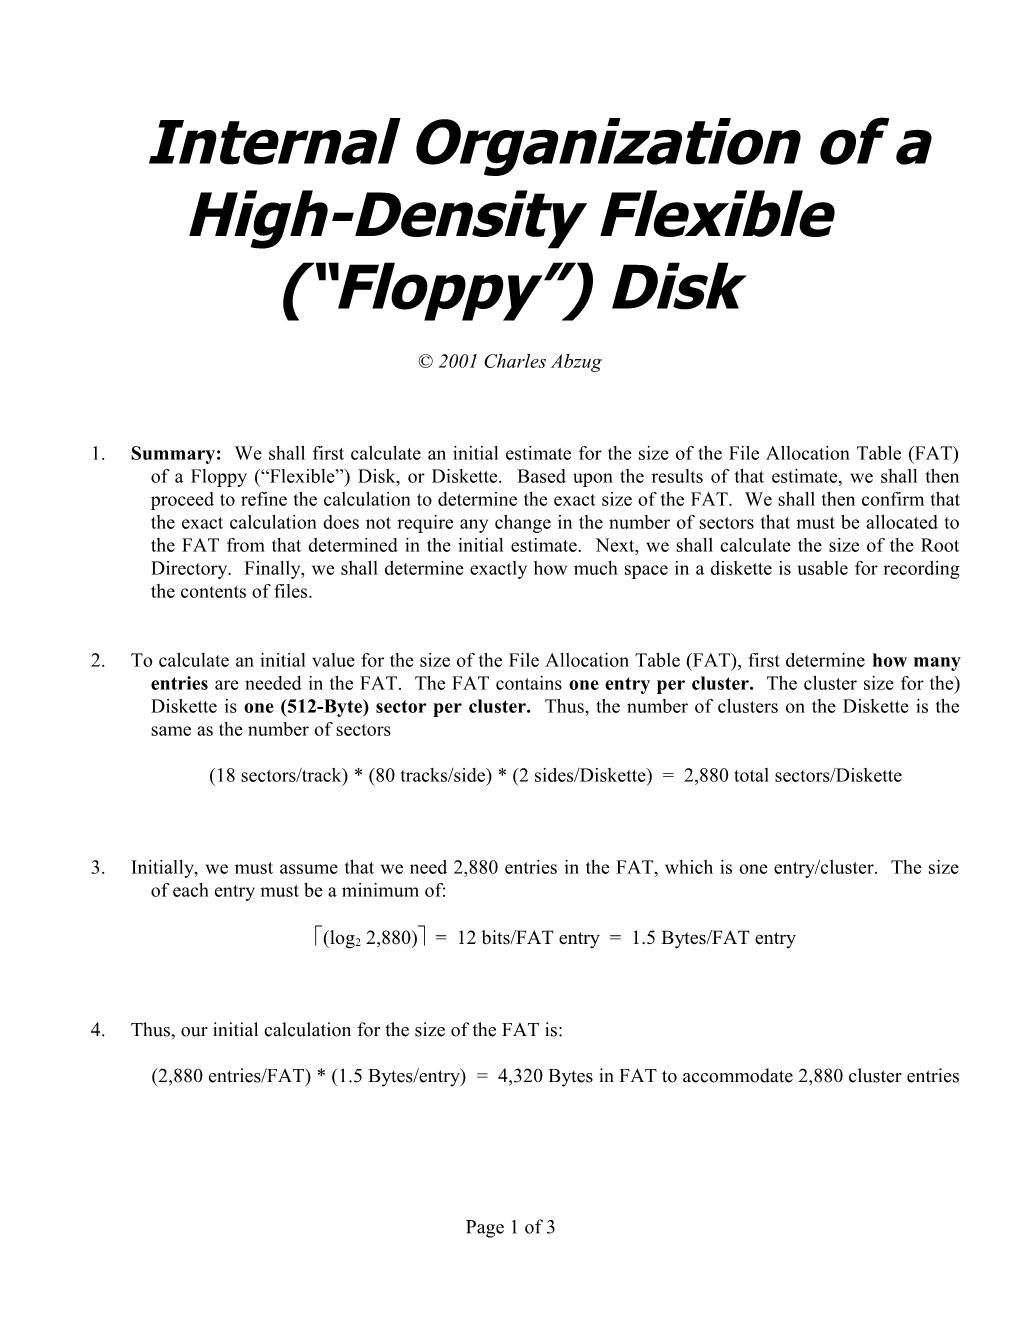 Internal Organization of a High-Density Flexible ( Floppy ) Disk